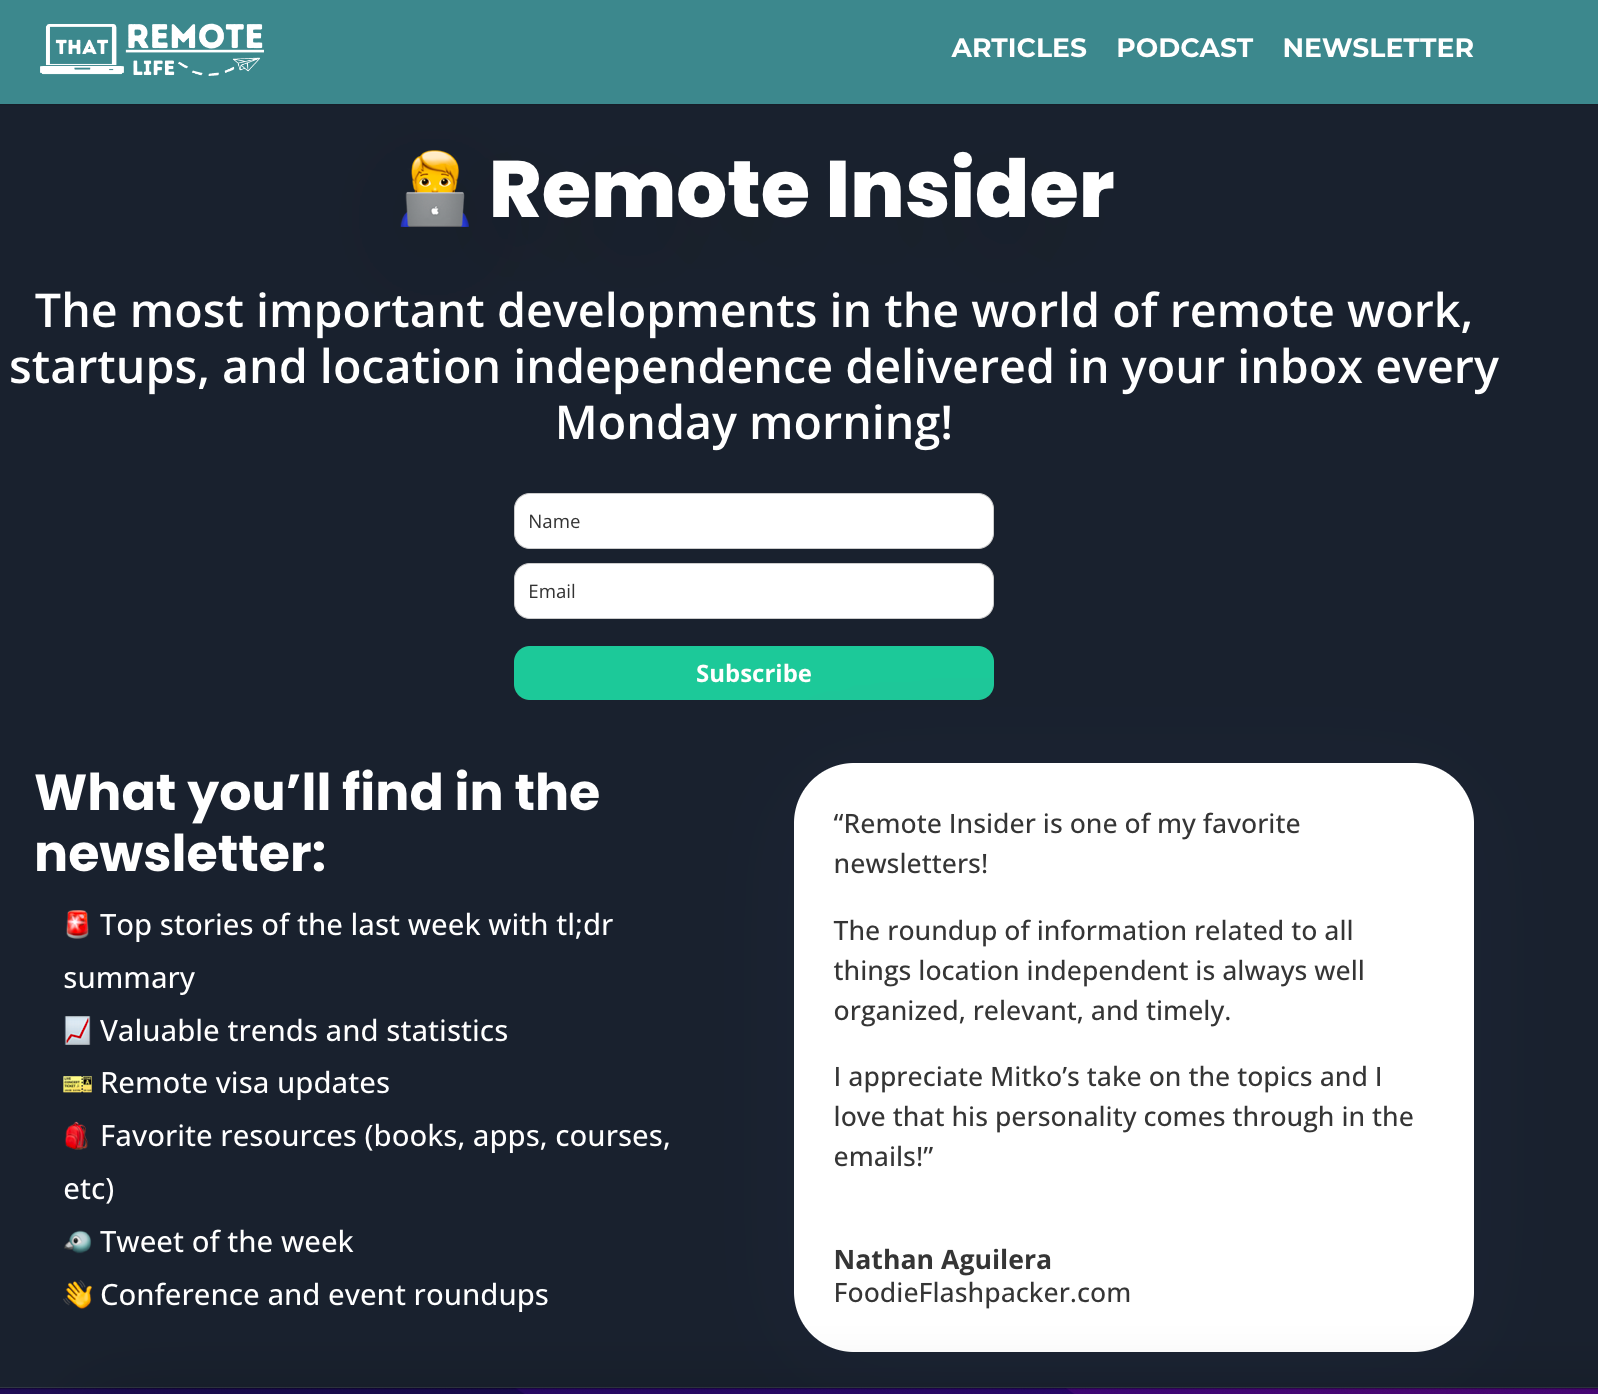 Remote Insider's newsletter signup page